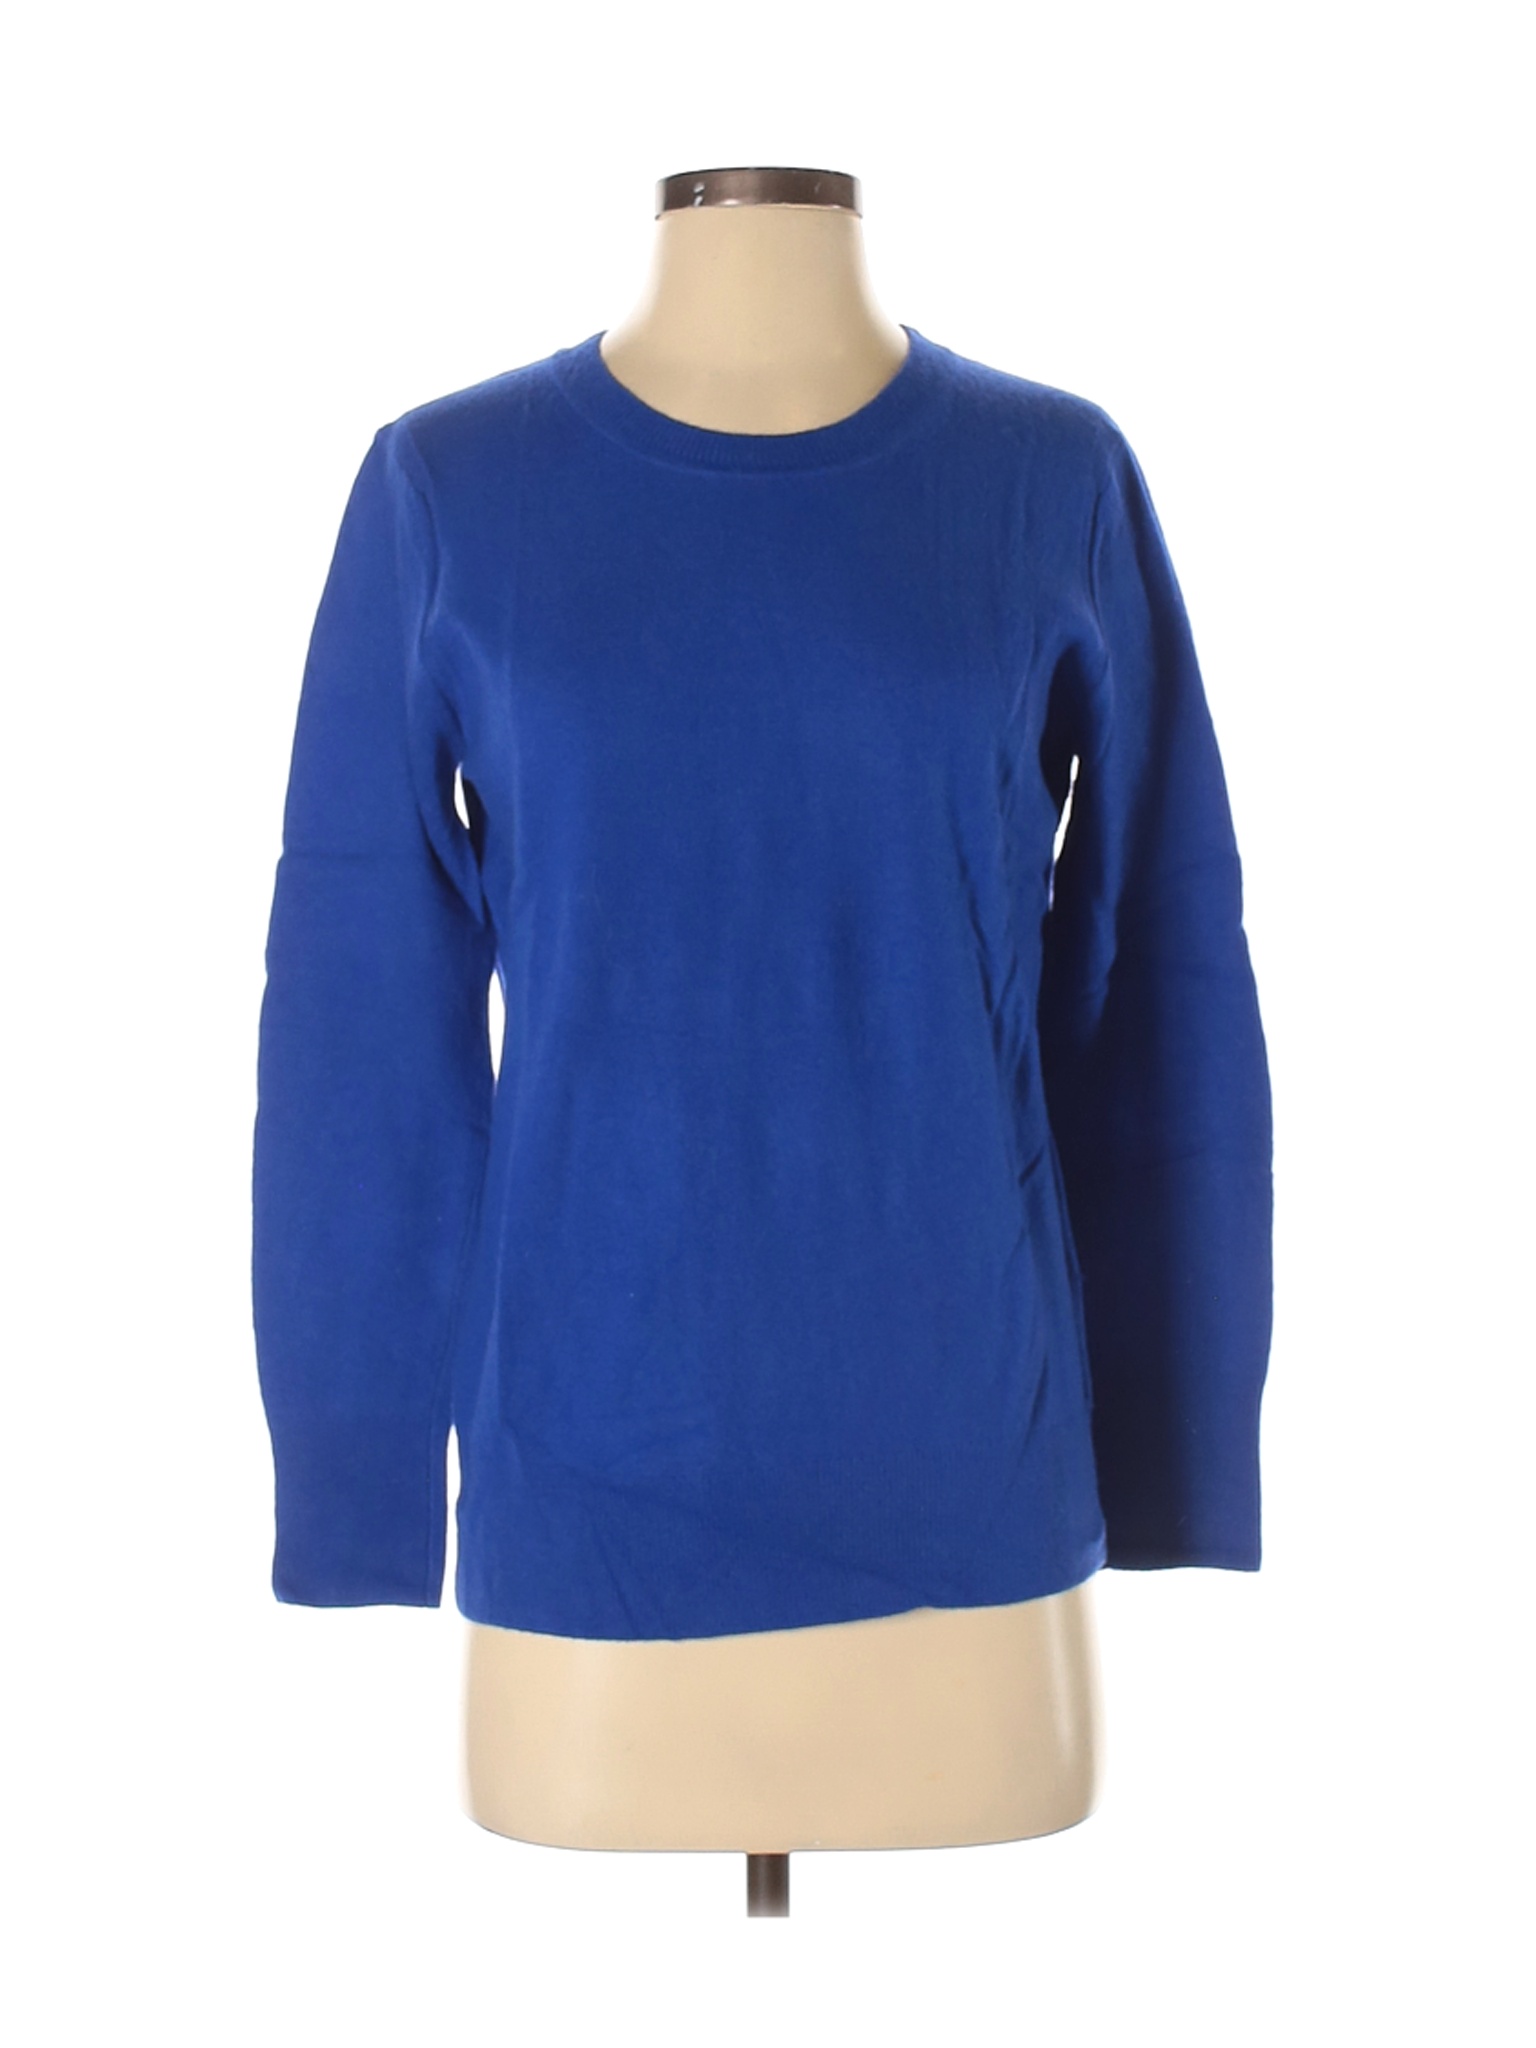 Banana Republic Women Blue Wool Pullover Sweater S | eBay